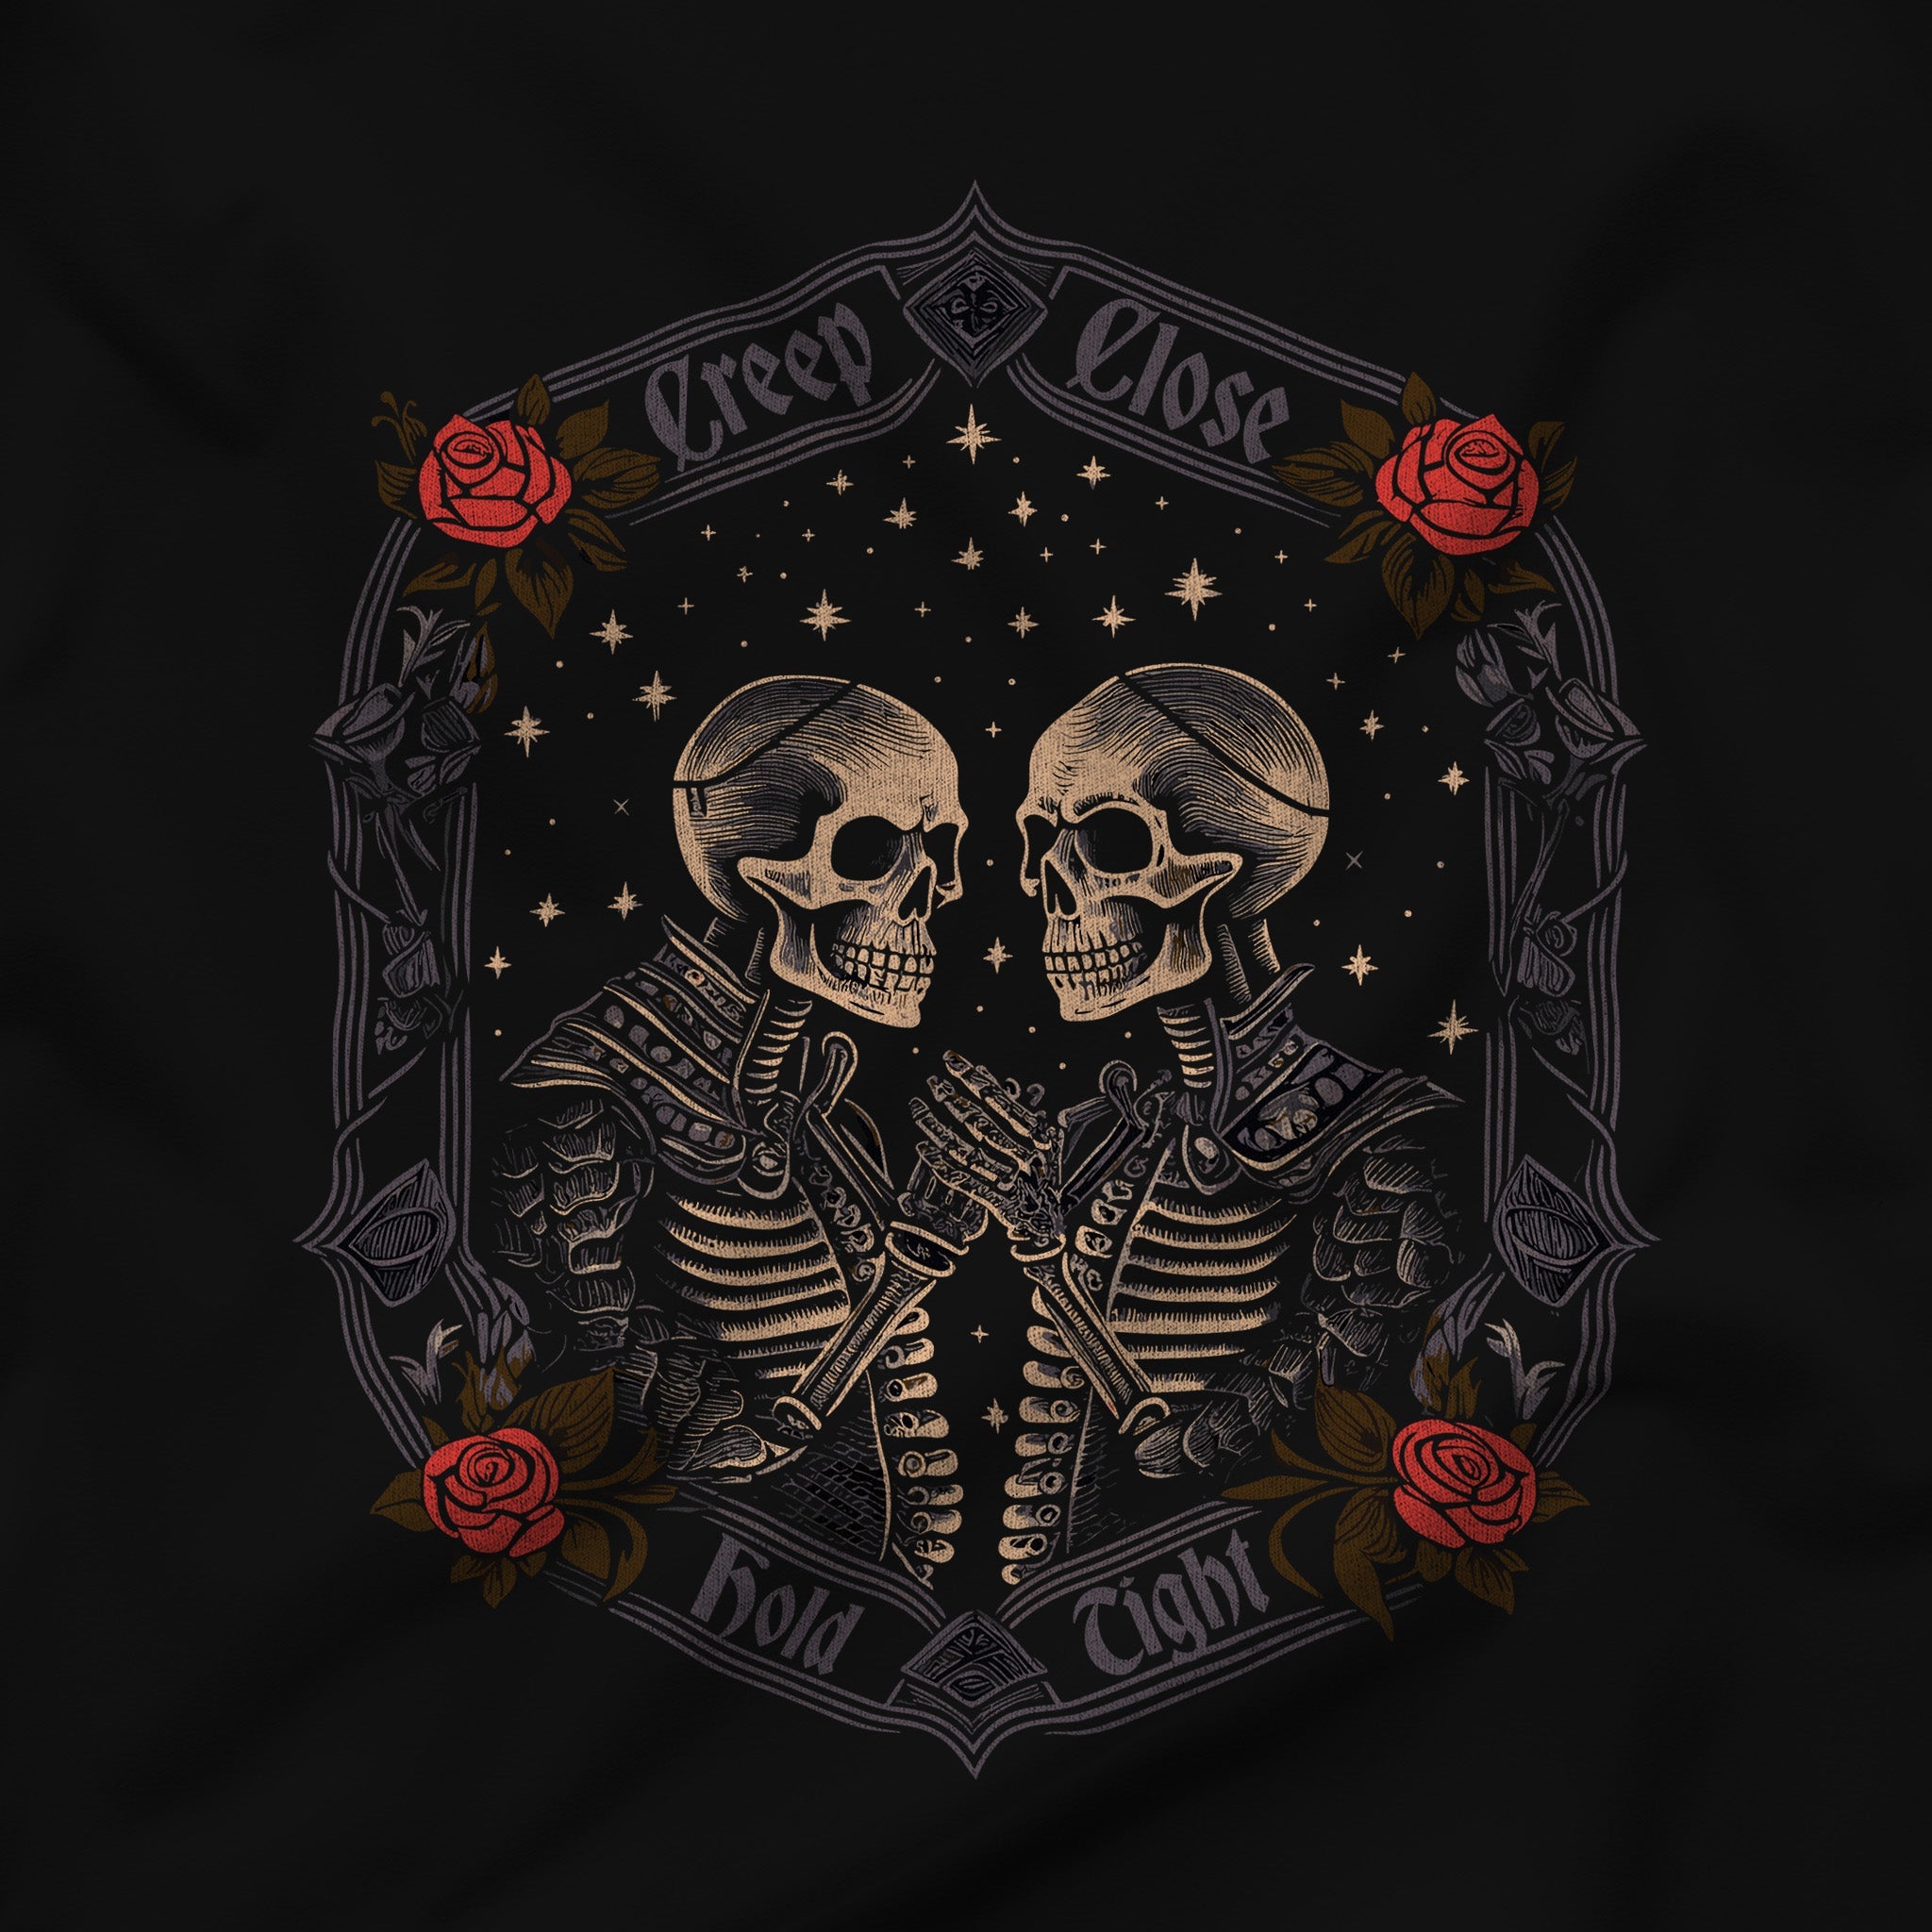 "Creep Close, Hold Tight" Halloween T-Shirt - A Bone-Chilling Romance - Hunky Tops